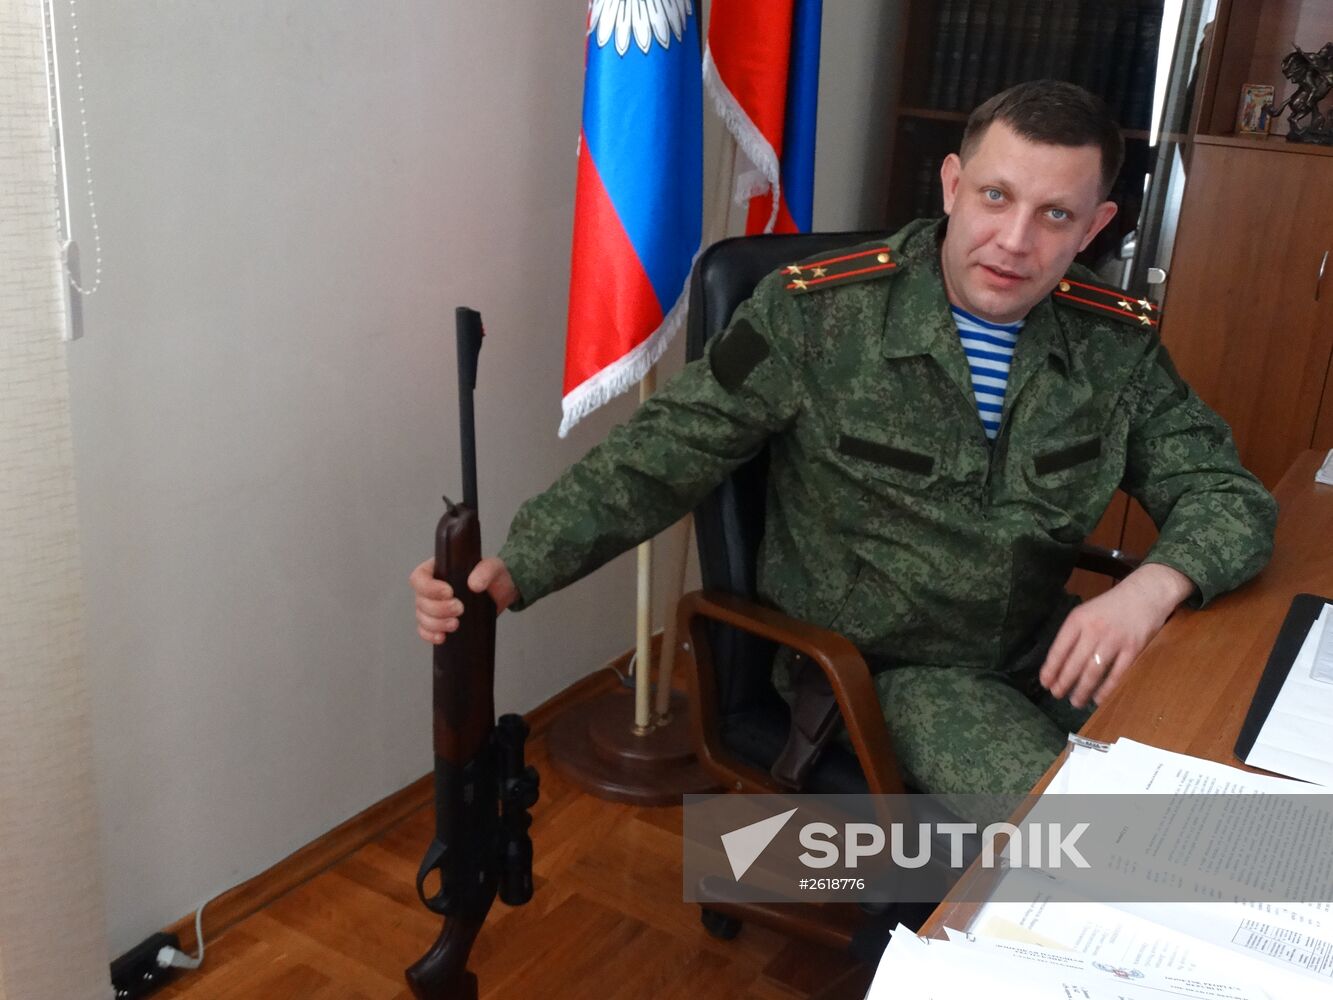 Donetsk People’s Republic leader Alexander Zakharchenko